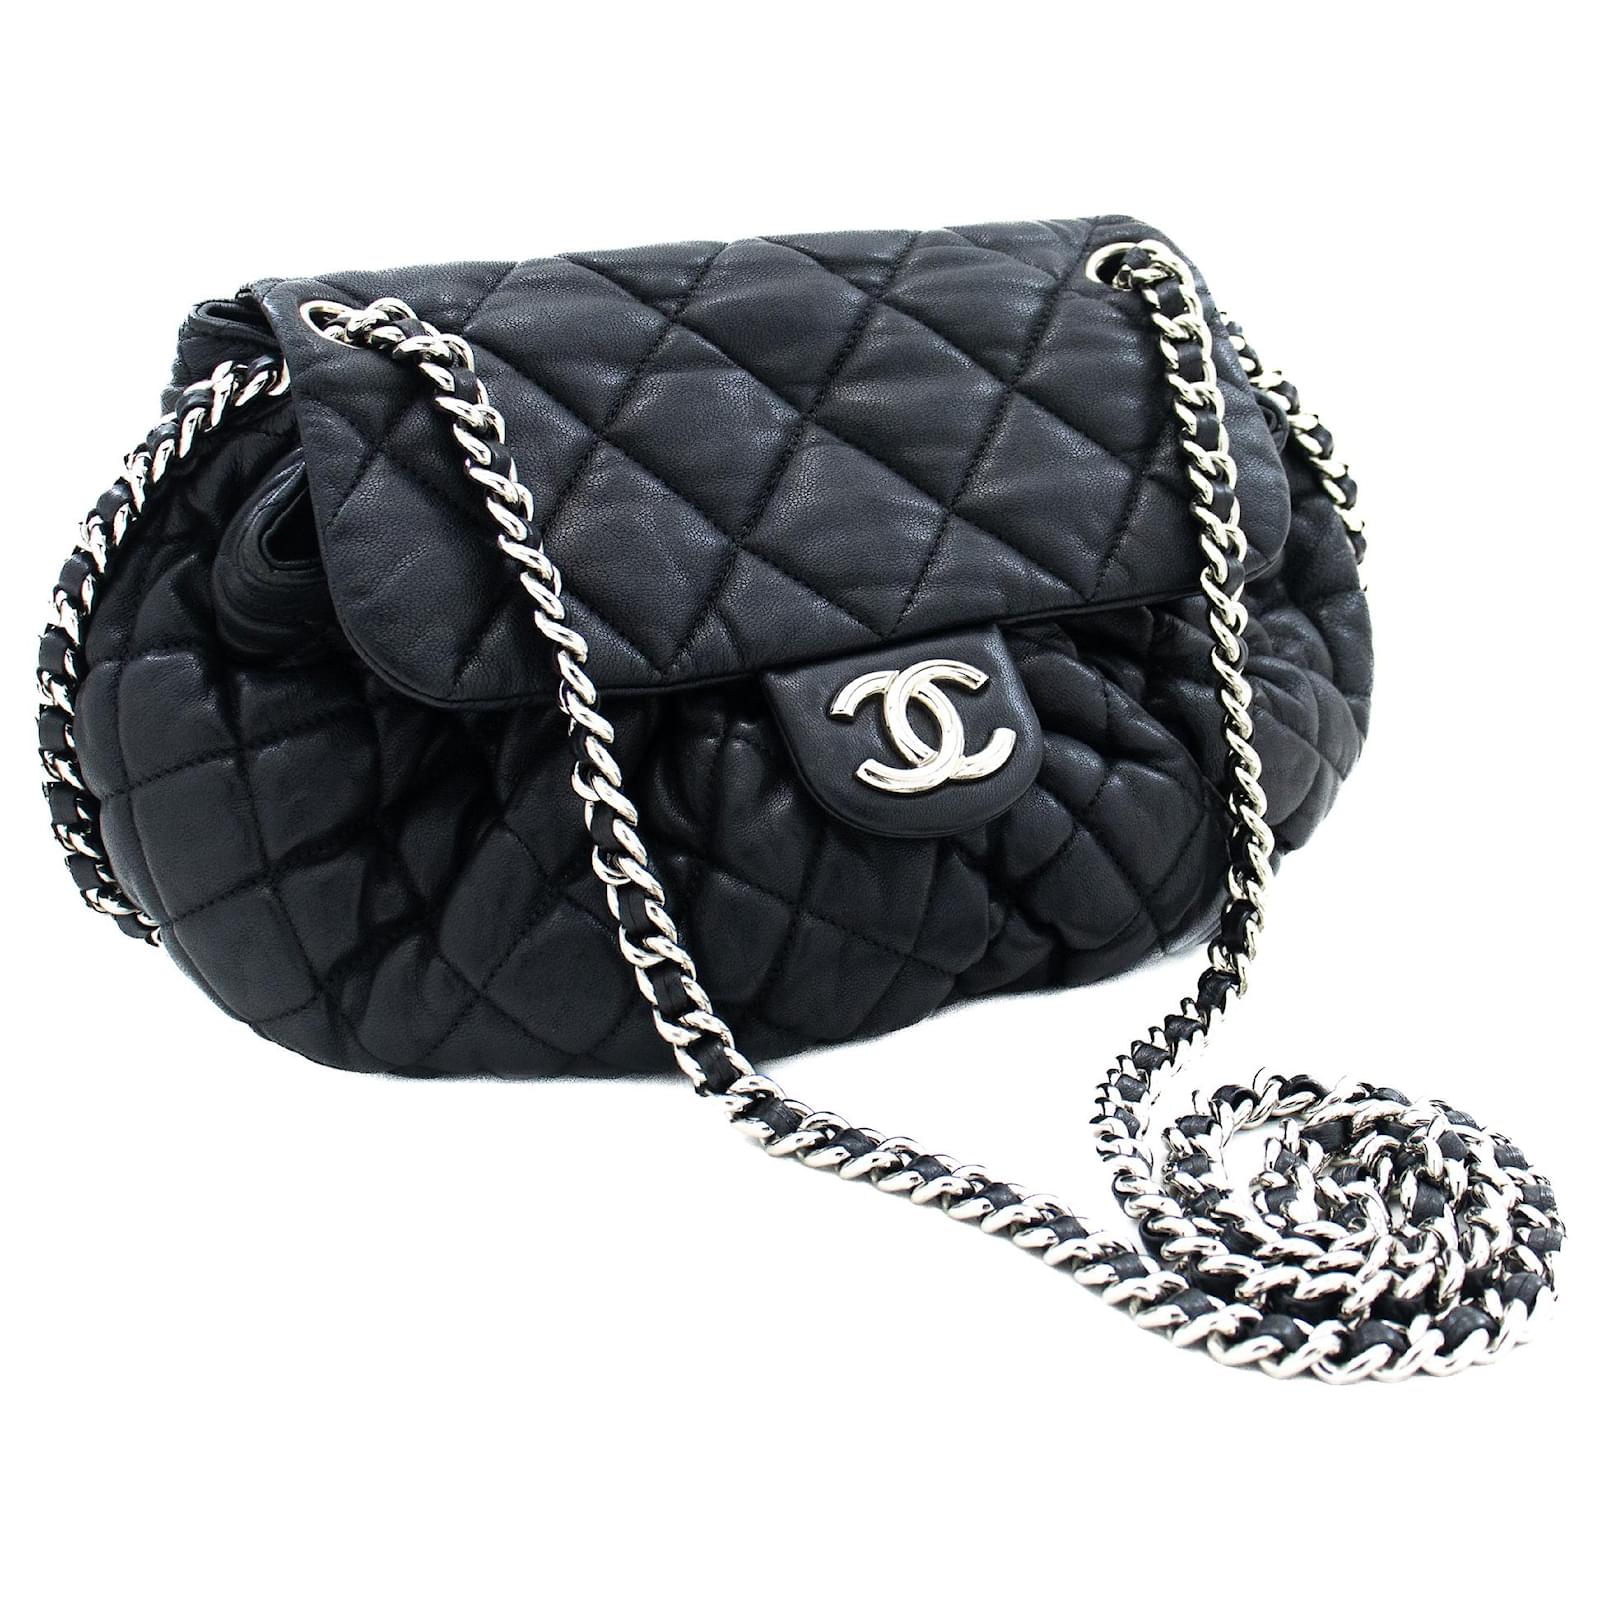 Handbags Chanel Chanel Chain Around Shoulder Bag Crossbody Black Calfskin Leather